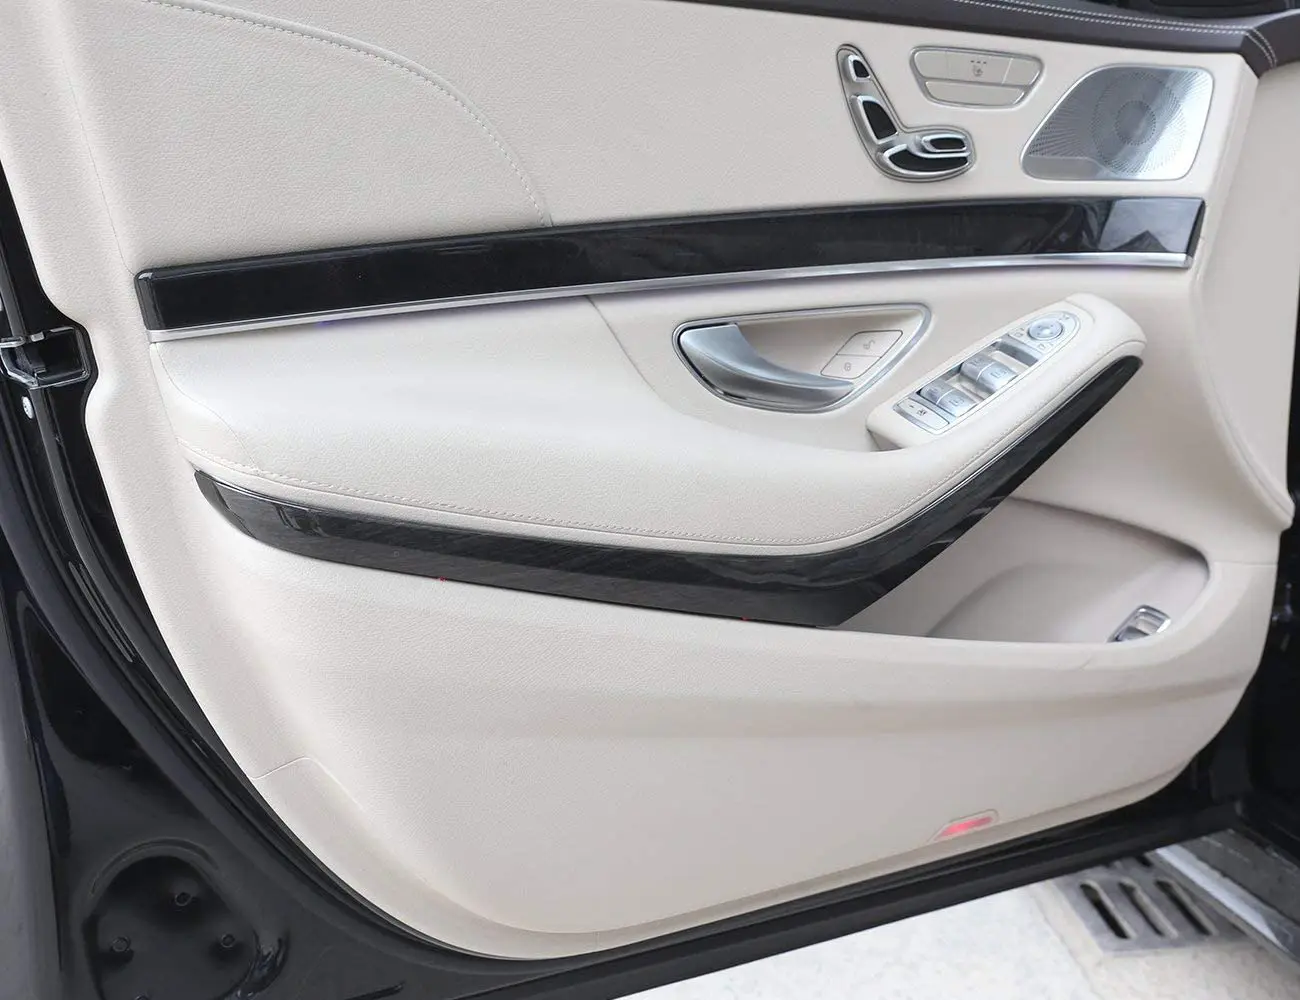 Aluminum Alloy Car Door Treble Speaker Decoration Cover Trim 2pcs For Mercedes Benz W222 S Class S320 S400 AMG 2014-2017 